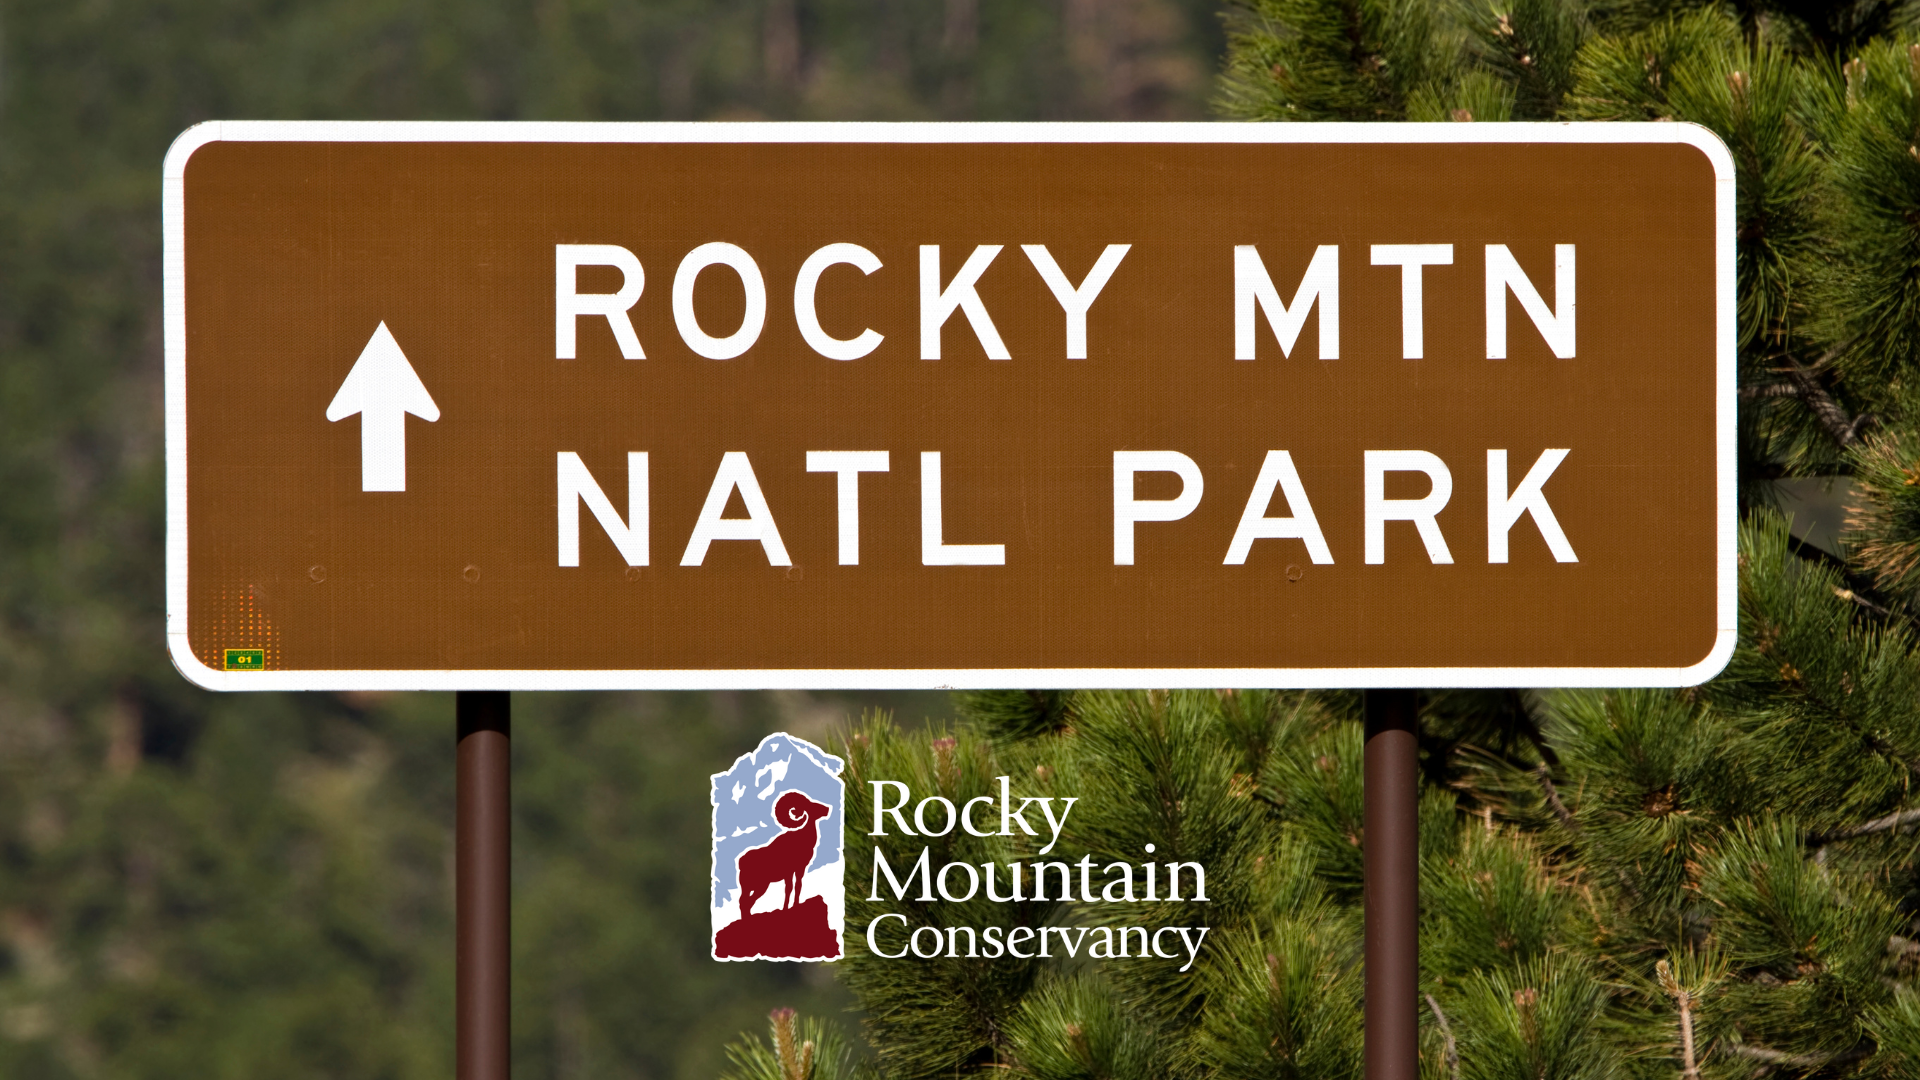 Rocky mtn nail park sign.